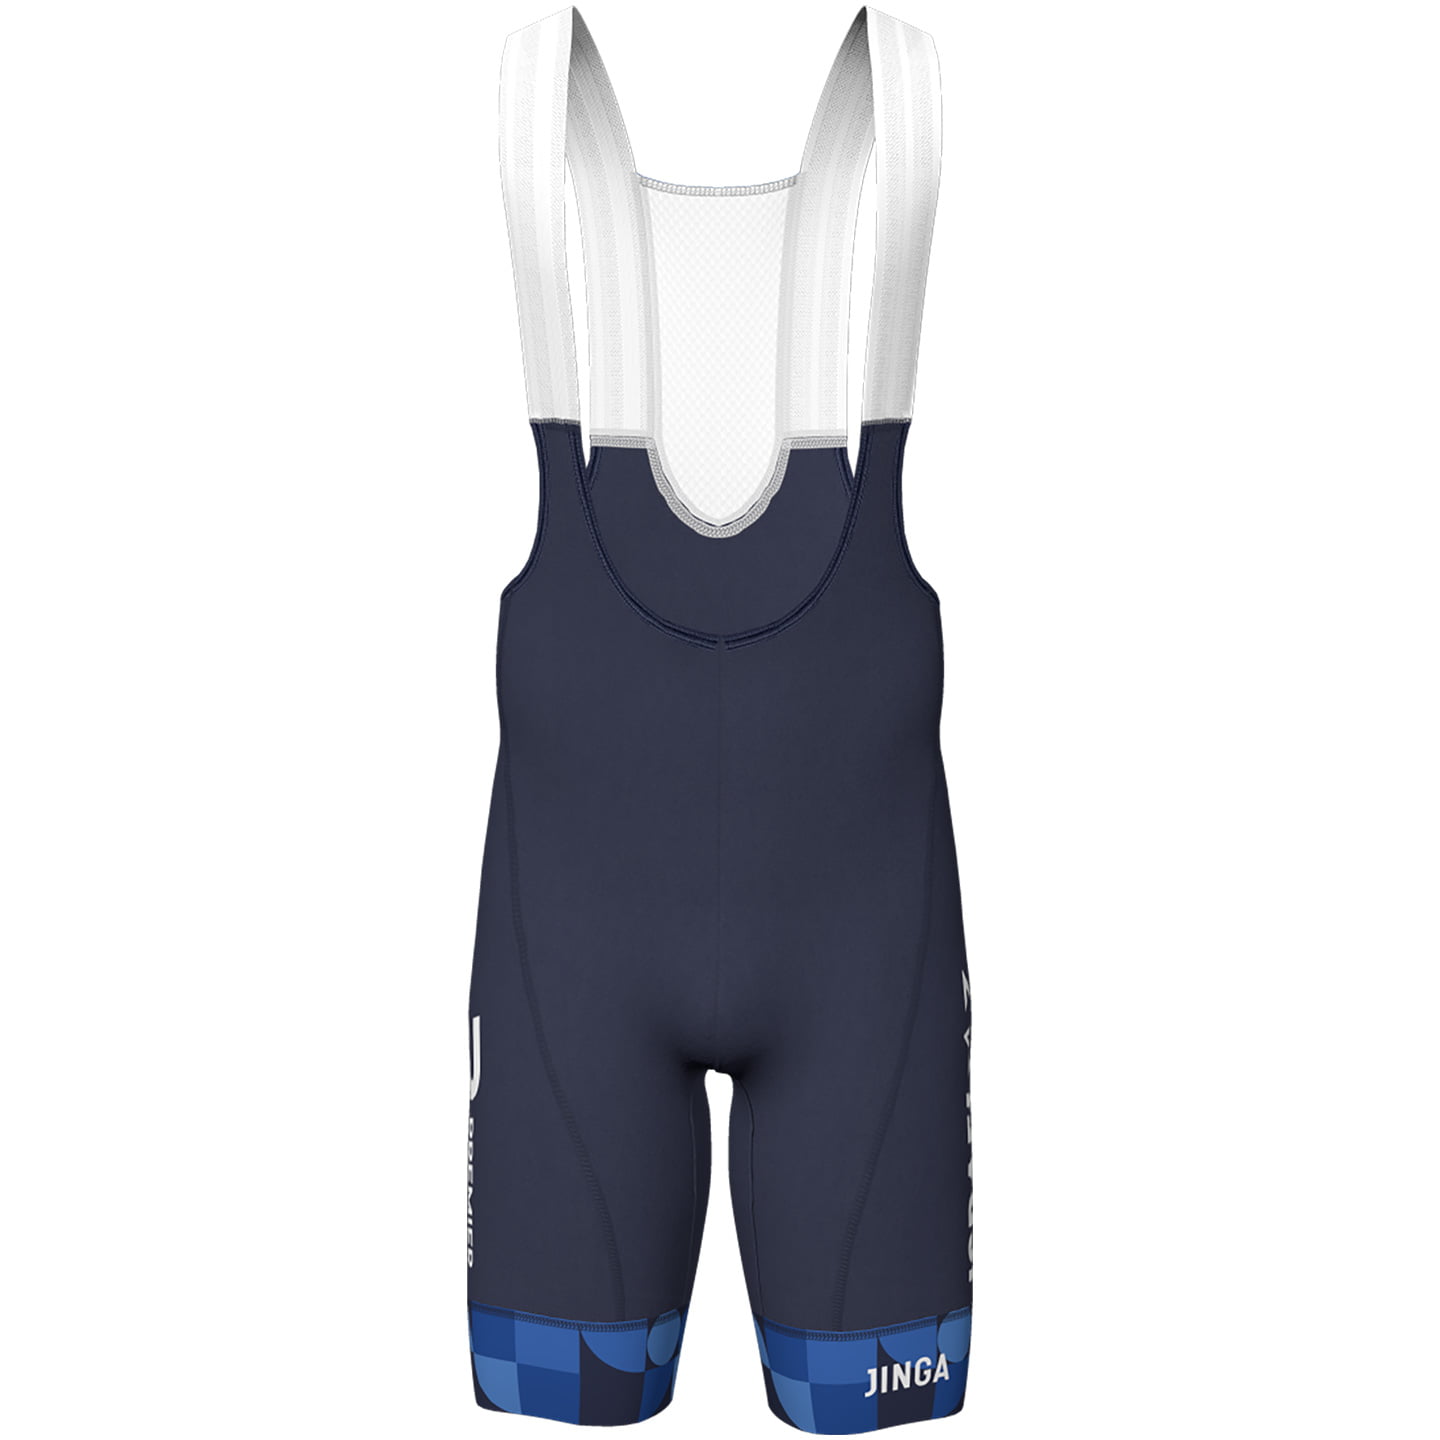 ISRAEL PREMIER TECH Pro 2022 Bib Shorts, for men, size L, Cycle shorts, Cycling clothing